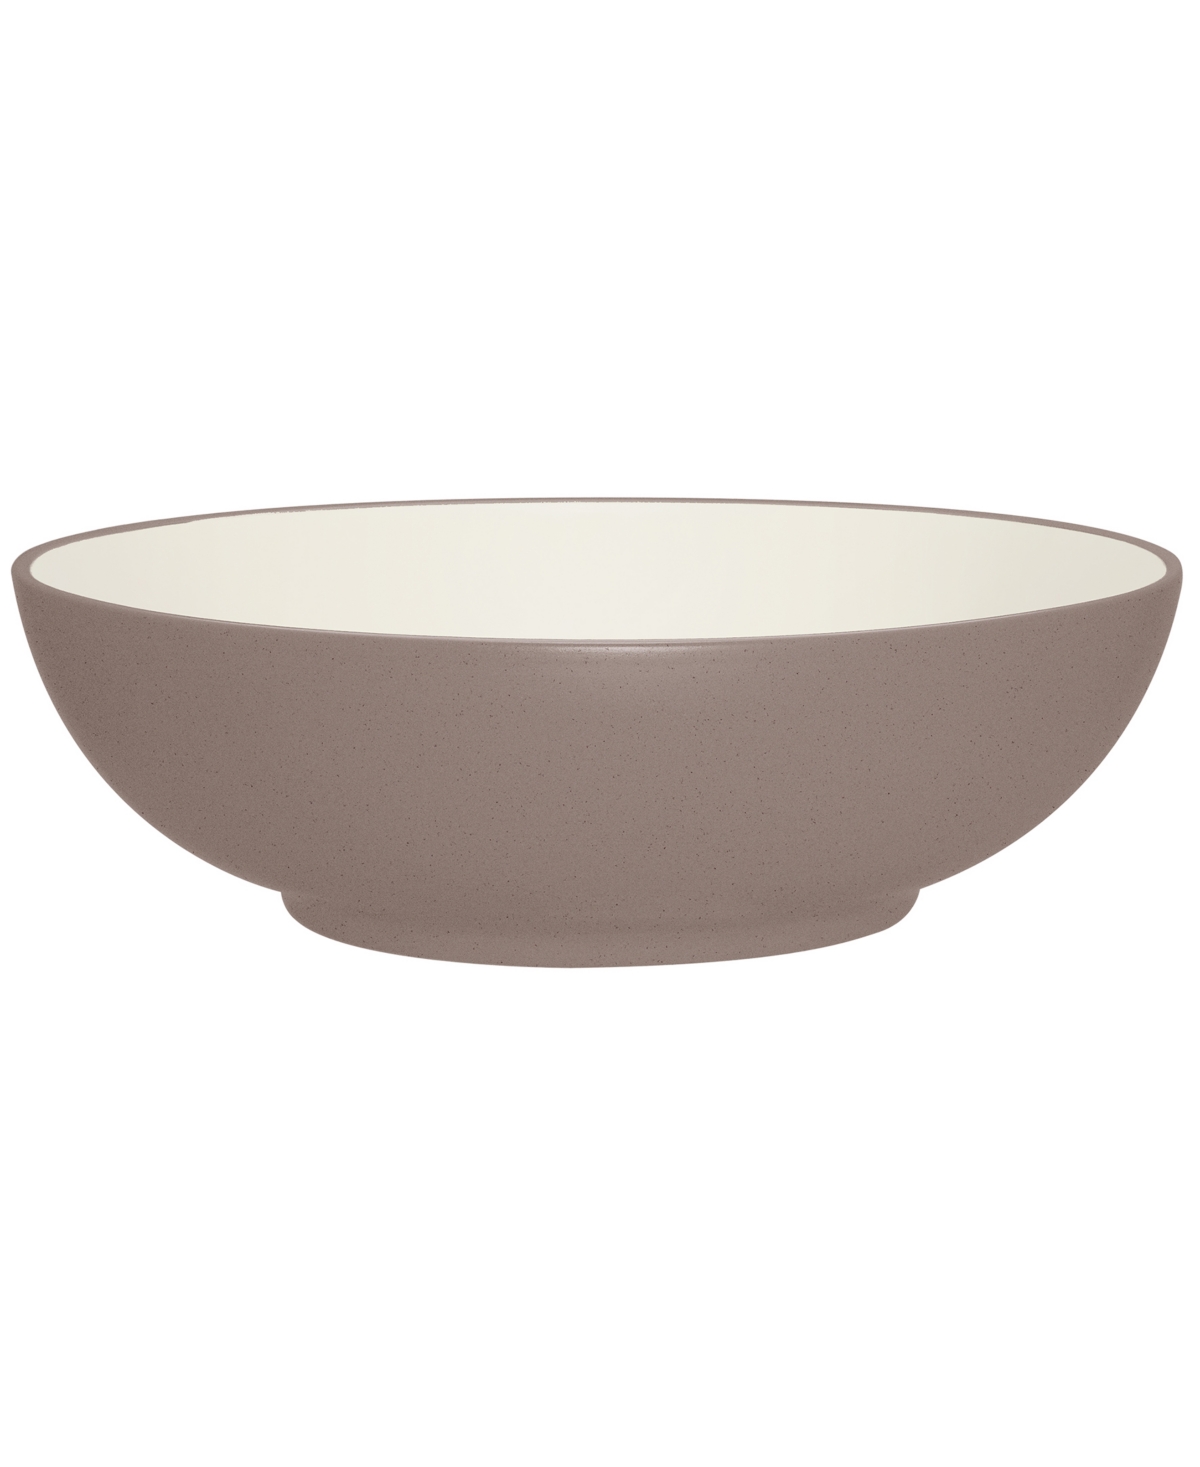 Noritake Colorwave 9.5" Round Vegetable Bowl, 64 oz In Clay